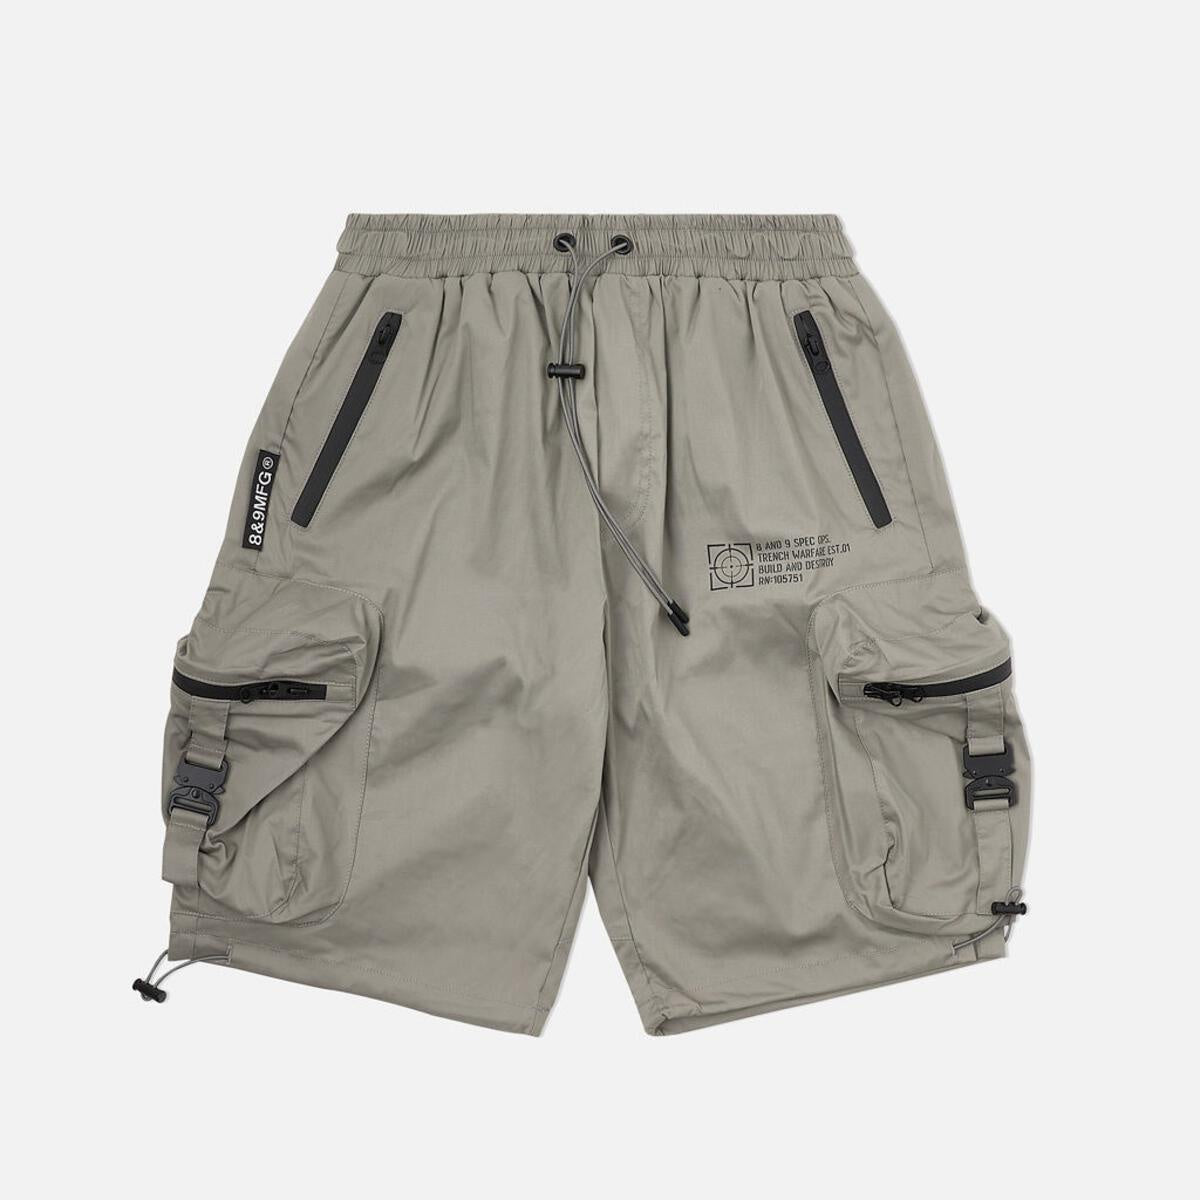 8&9 Light Grey Combat Nylon Shorts (SHCOMGRY)